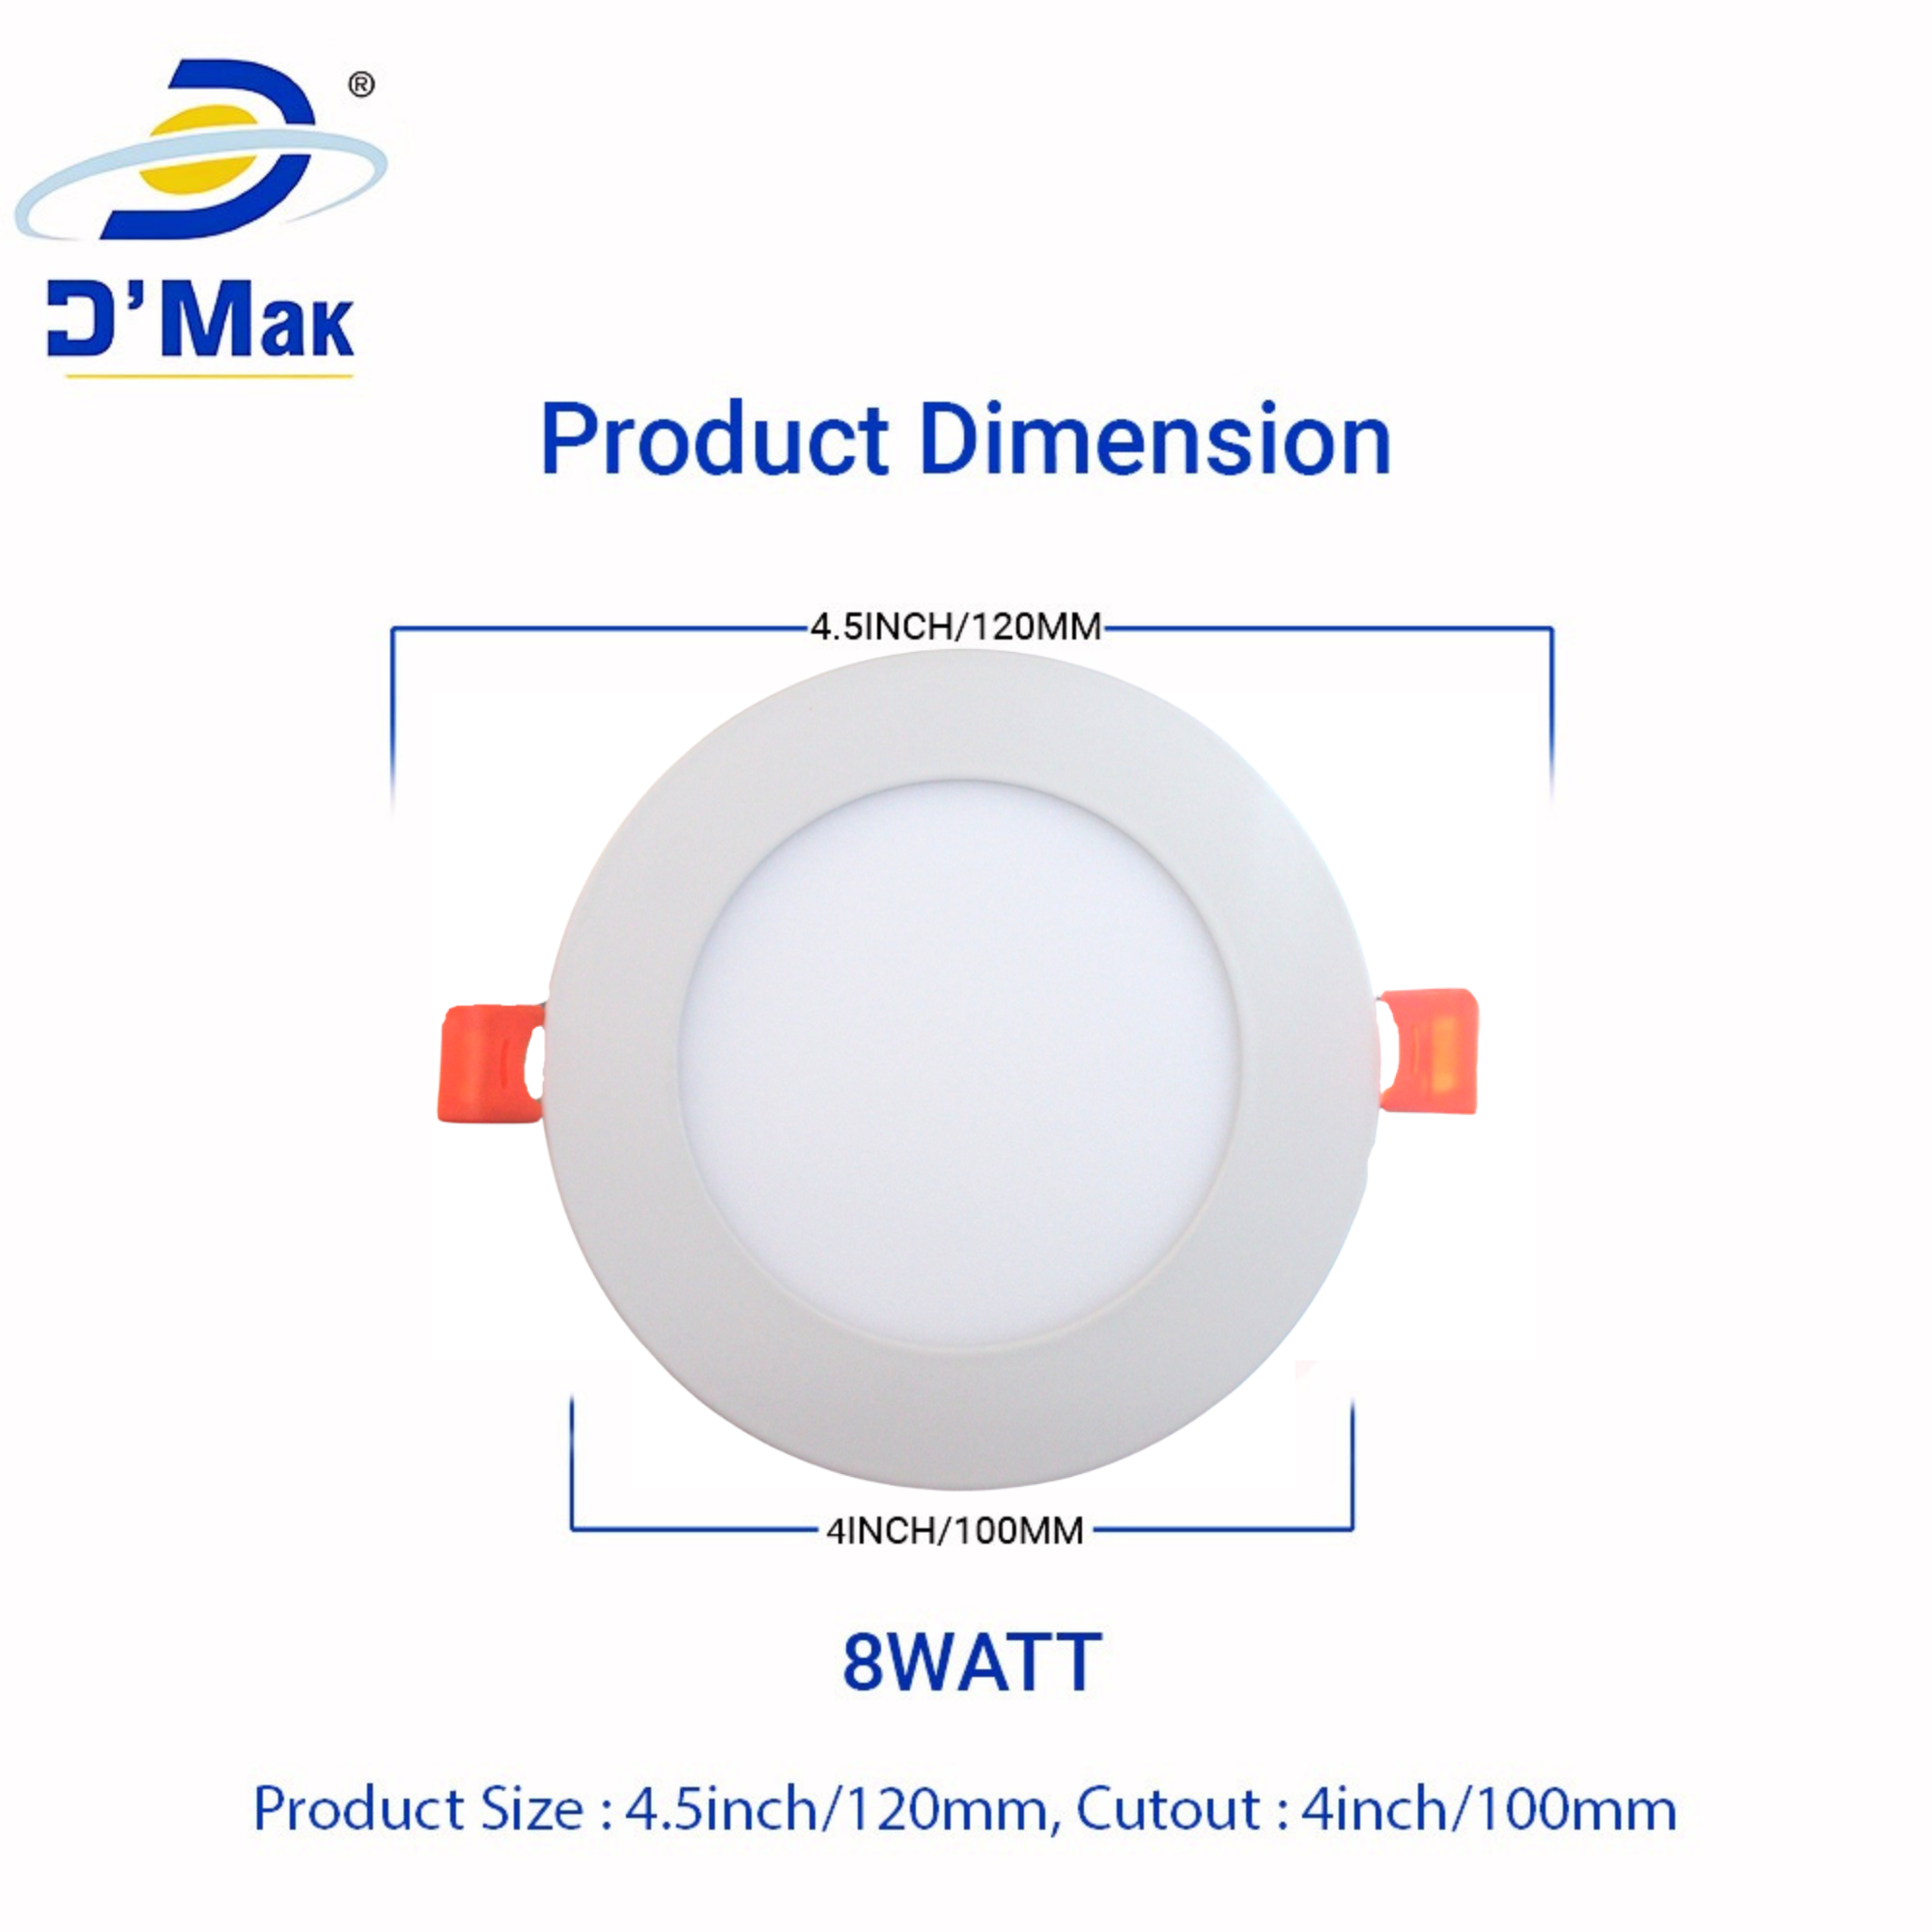 8 Watt Led Conceal Panel Light for POP/ Recessed Lighting 3in1 (White, Warm White, Natural White)